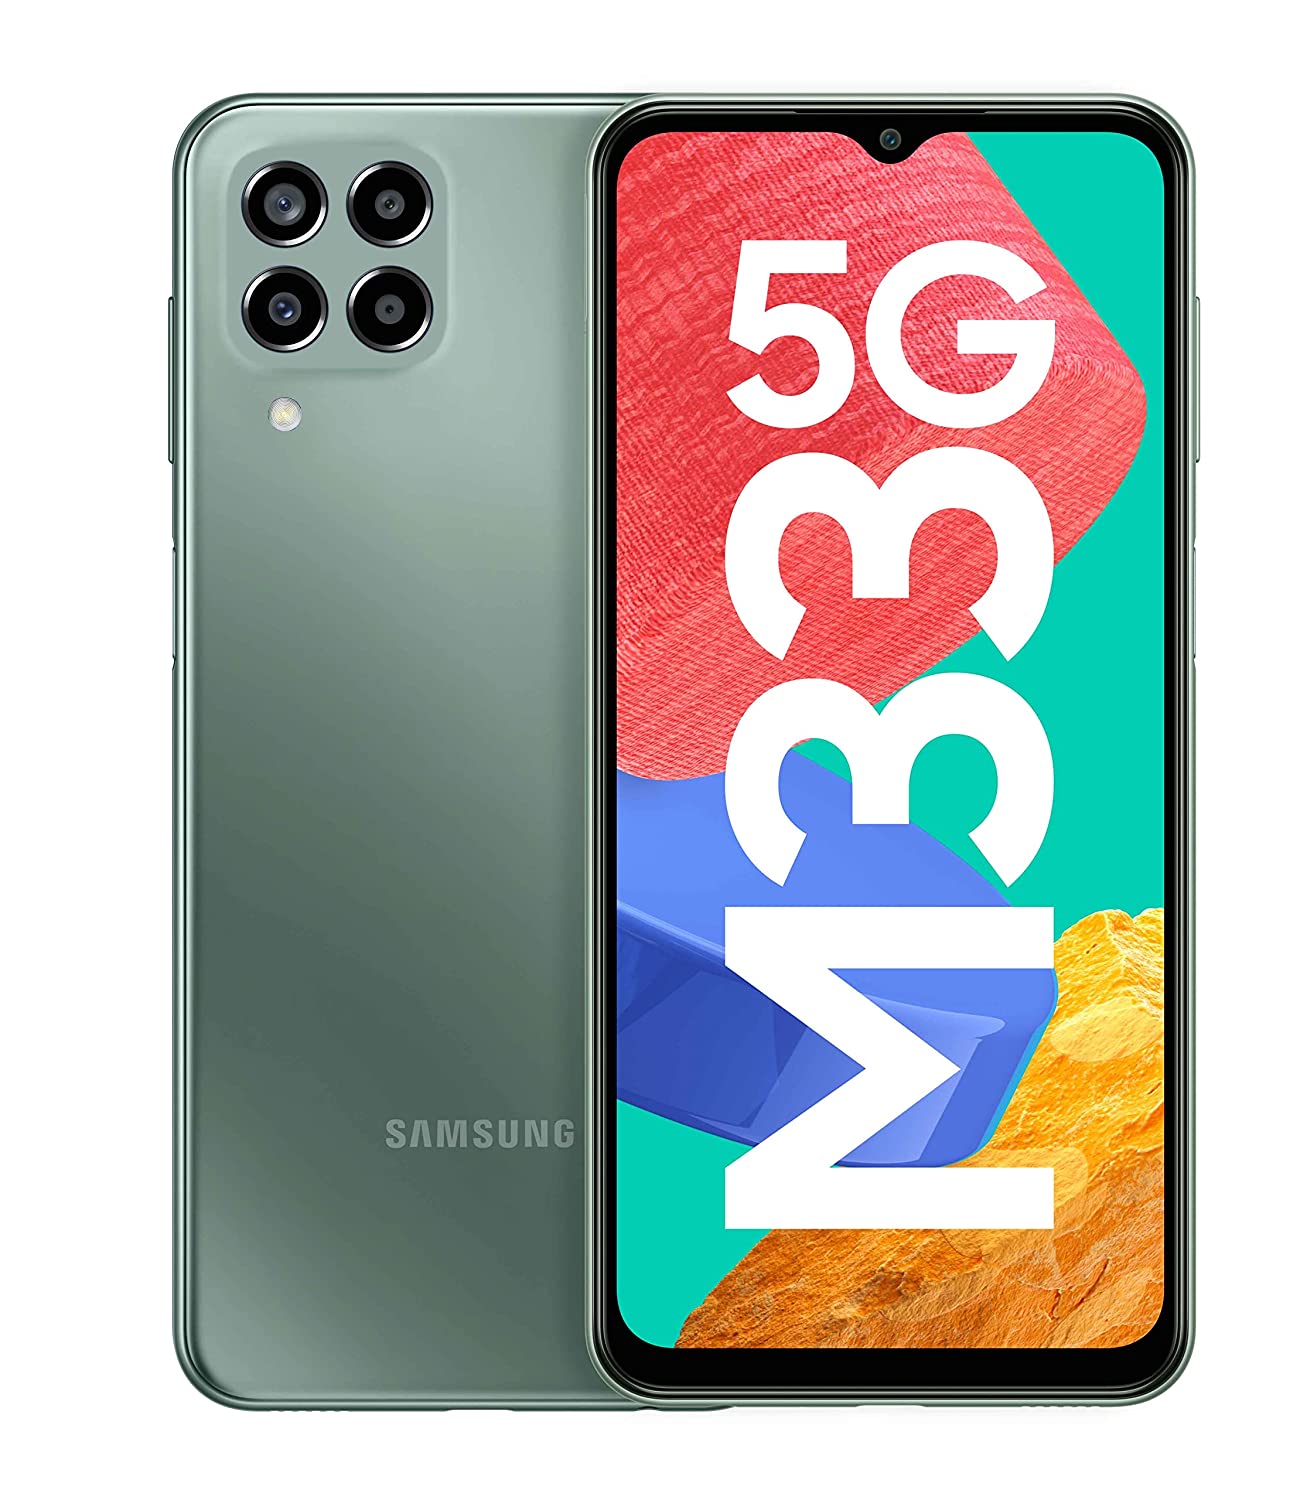 Samsung M M 33 5G - Blue image